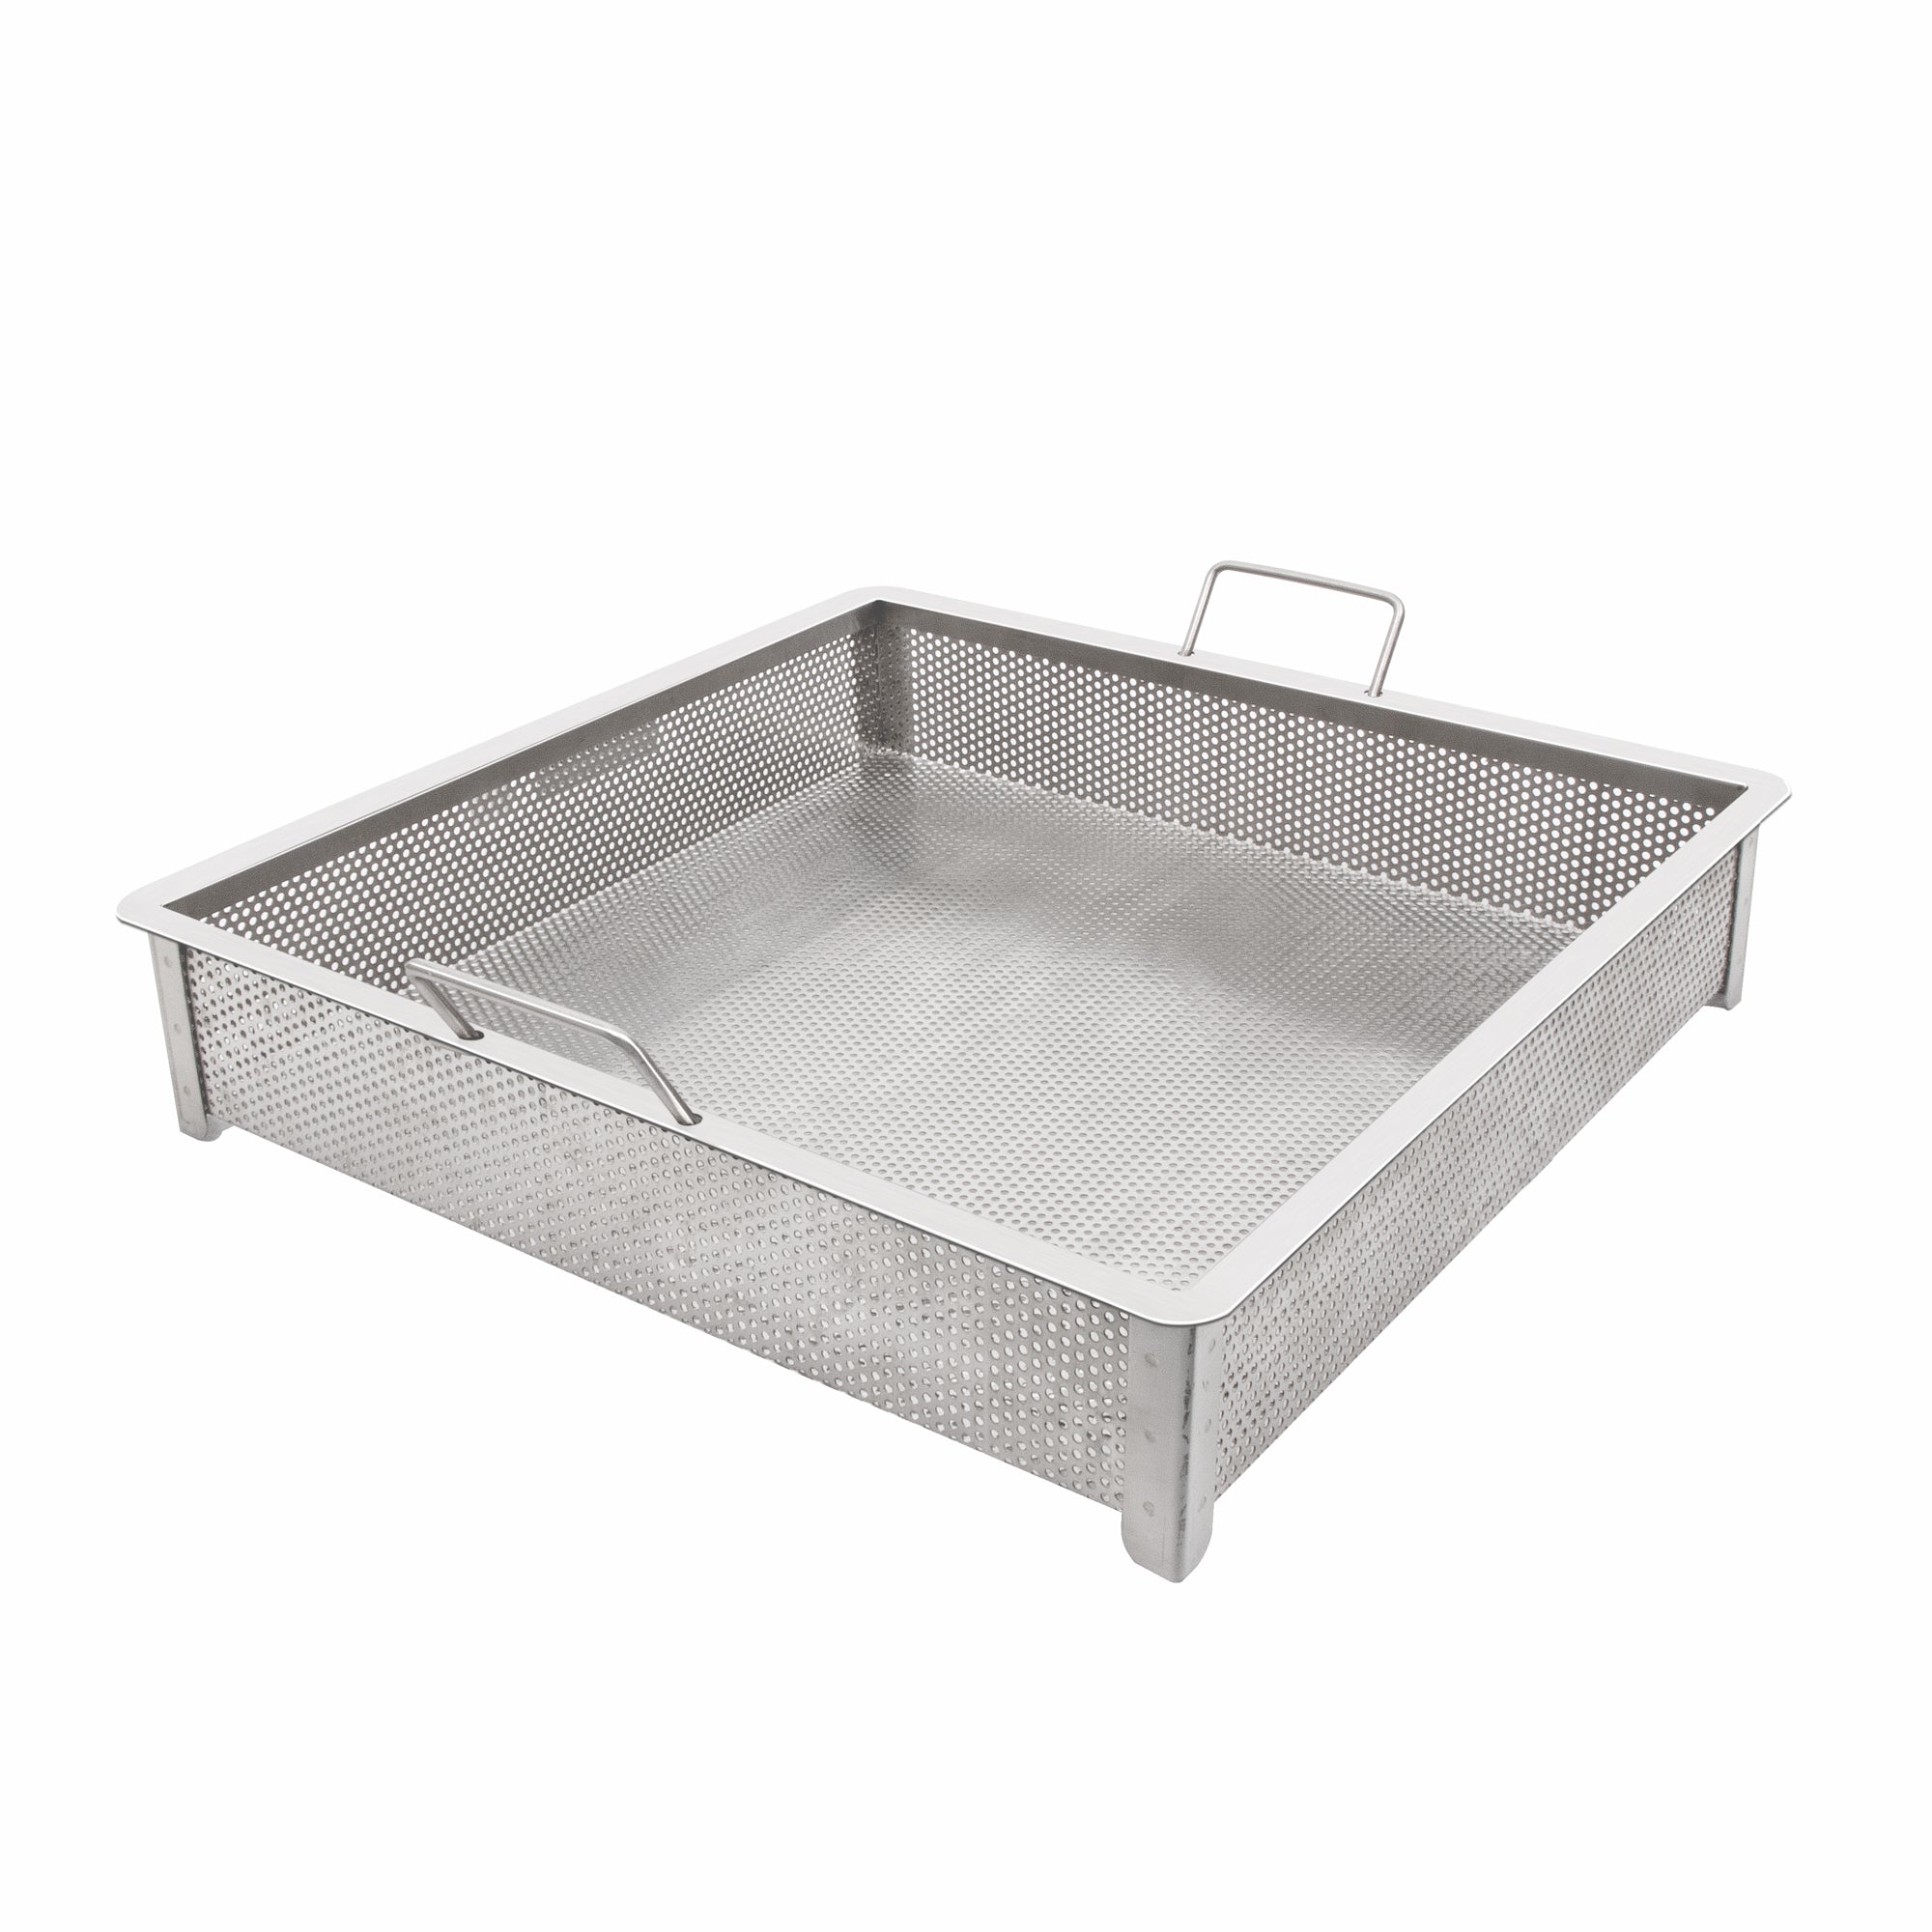 Leyso Stainless Steel Compartment ETL Certified Drop-In Sink Drain Basket (18" x 18", Drain Basket)